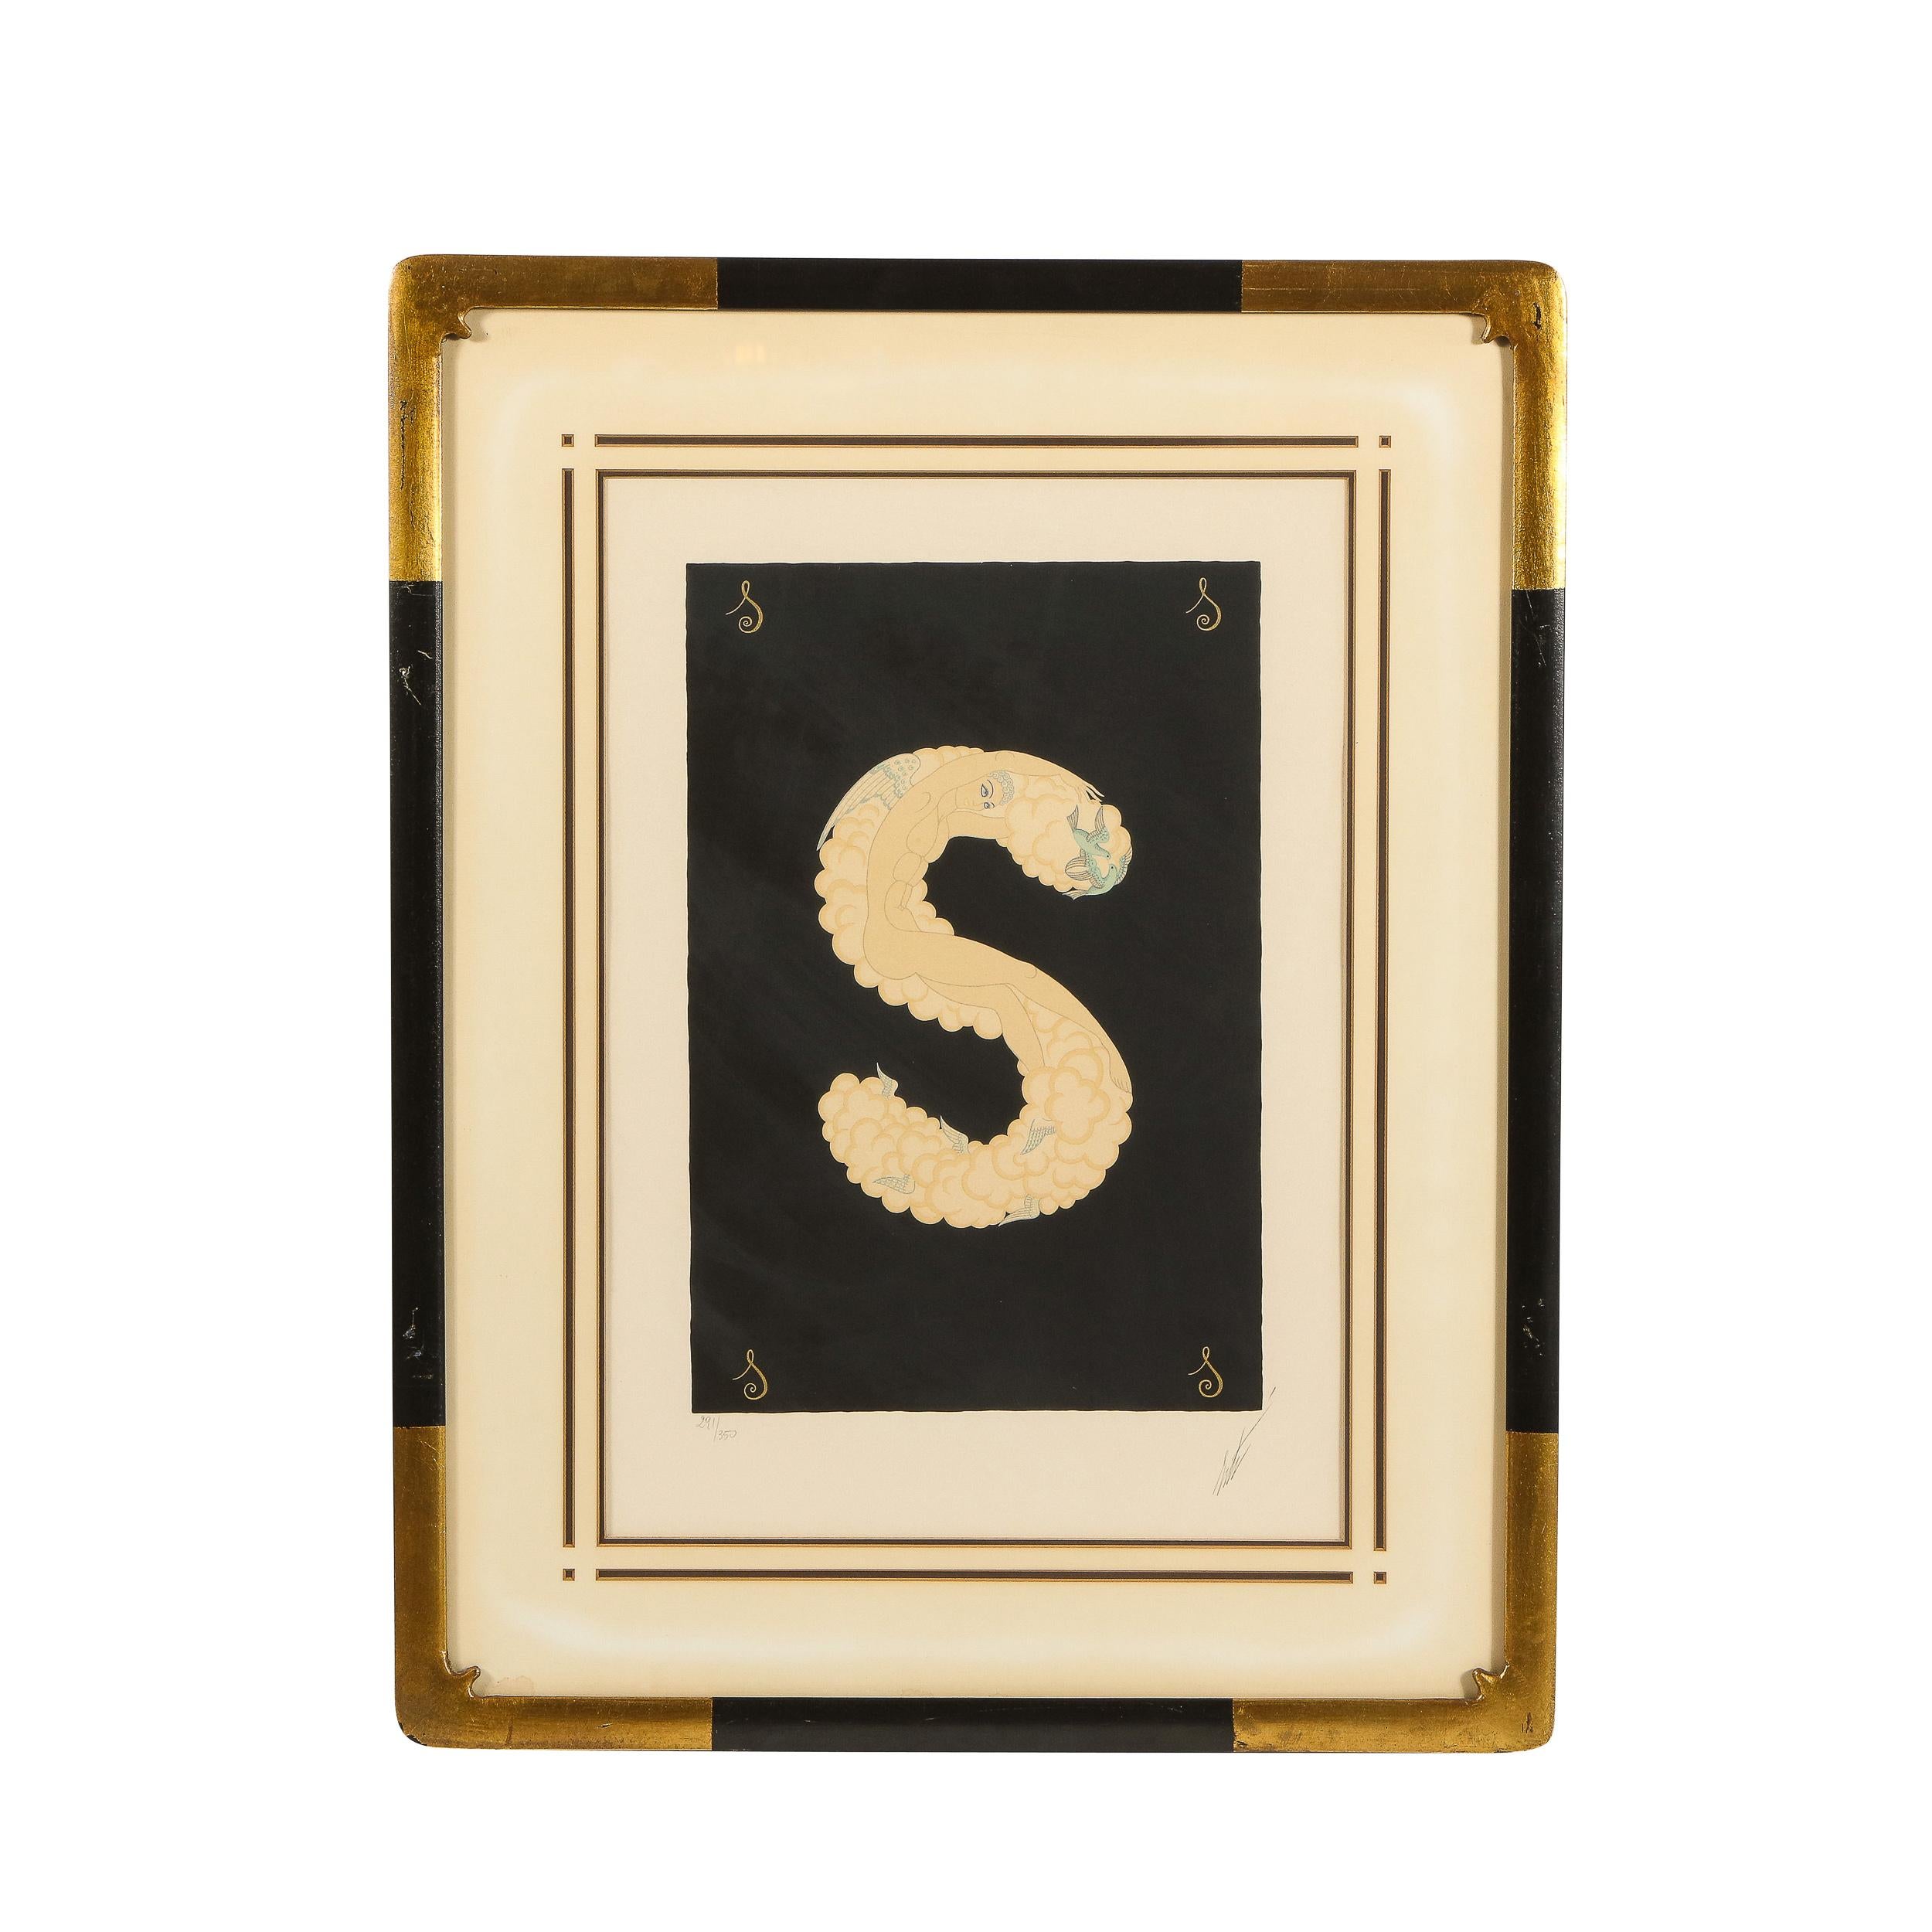 Letter "S" from Alphabet Suite (Signed Erté)